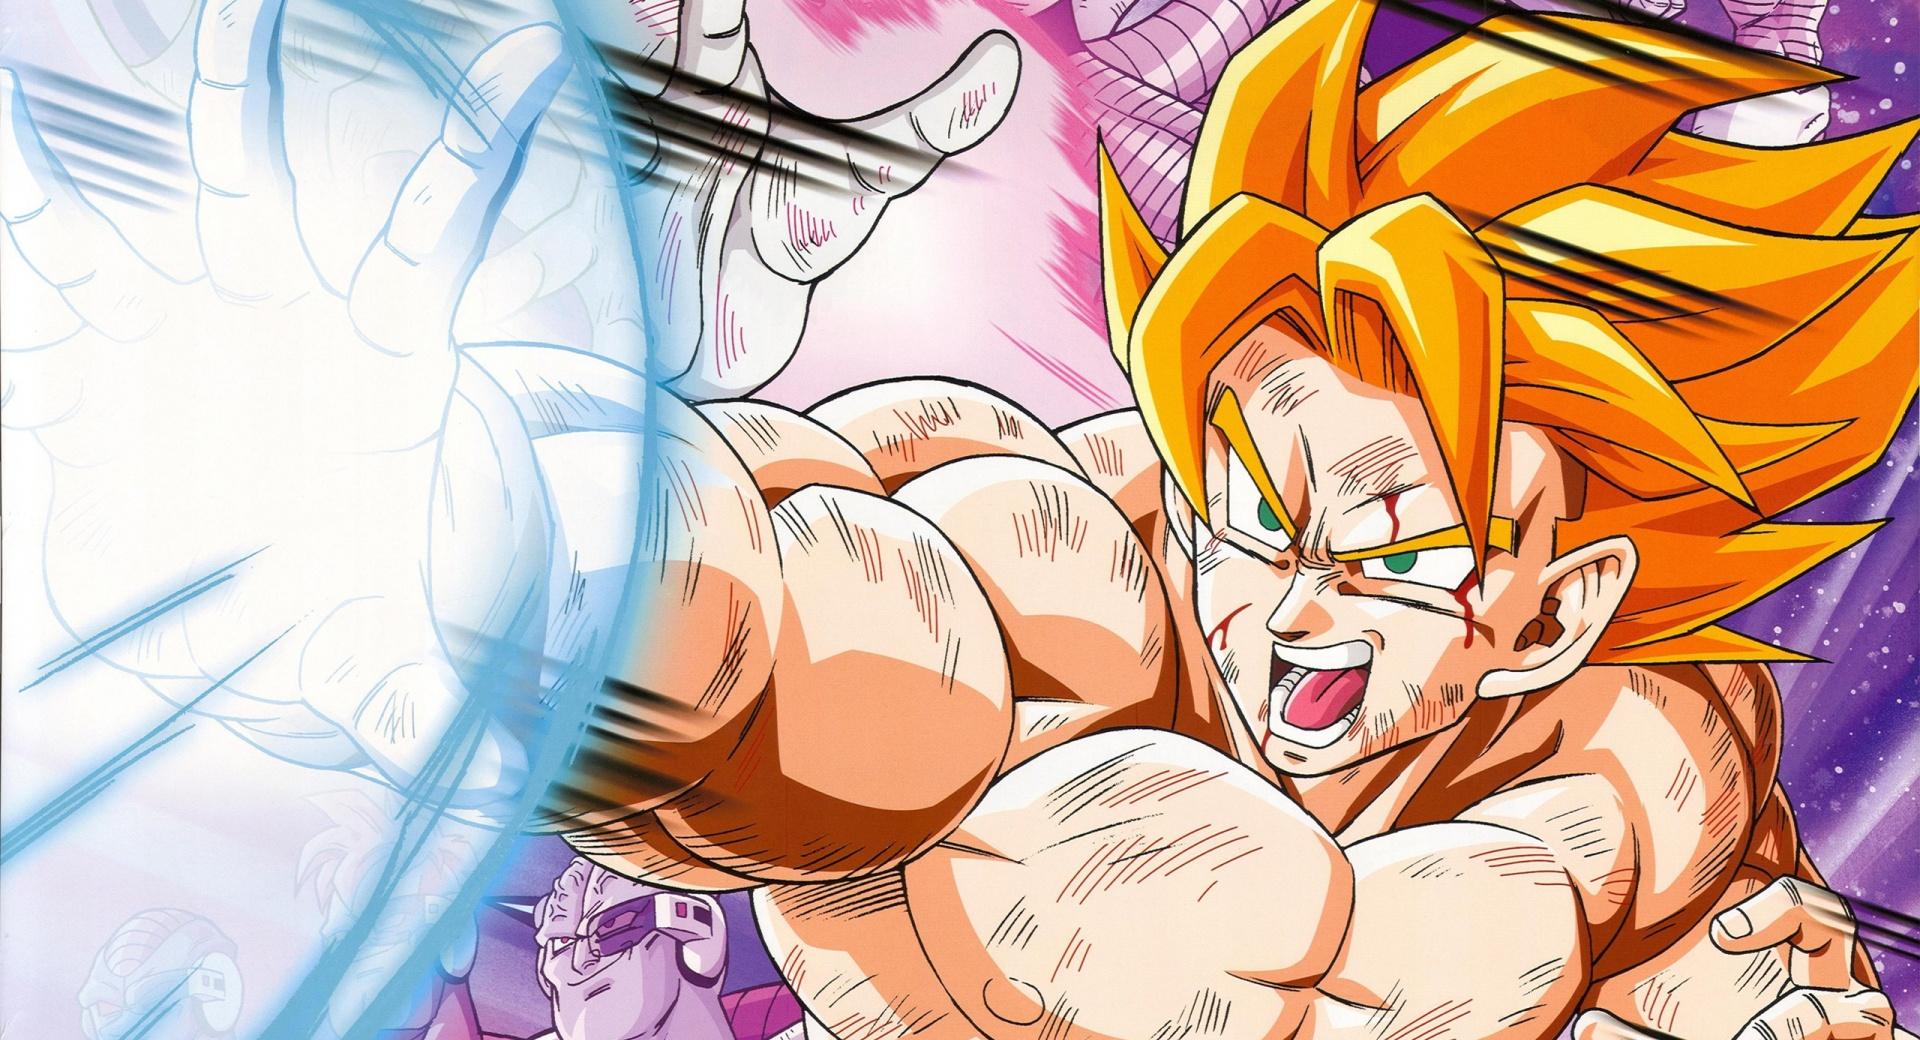 Dragon Ball Z - Super Saiyan Goku at 1280 x 960 size wallpapers HD quality